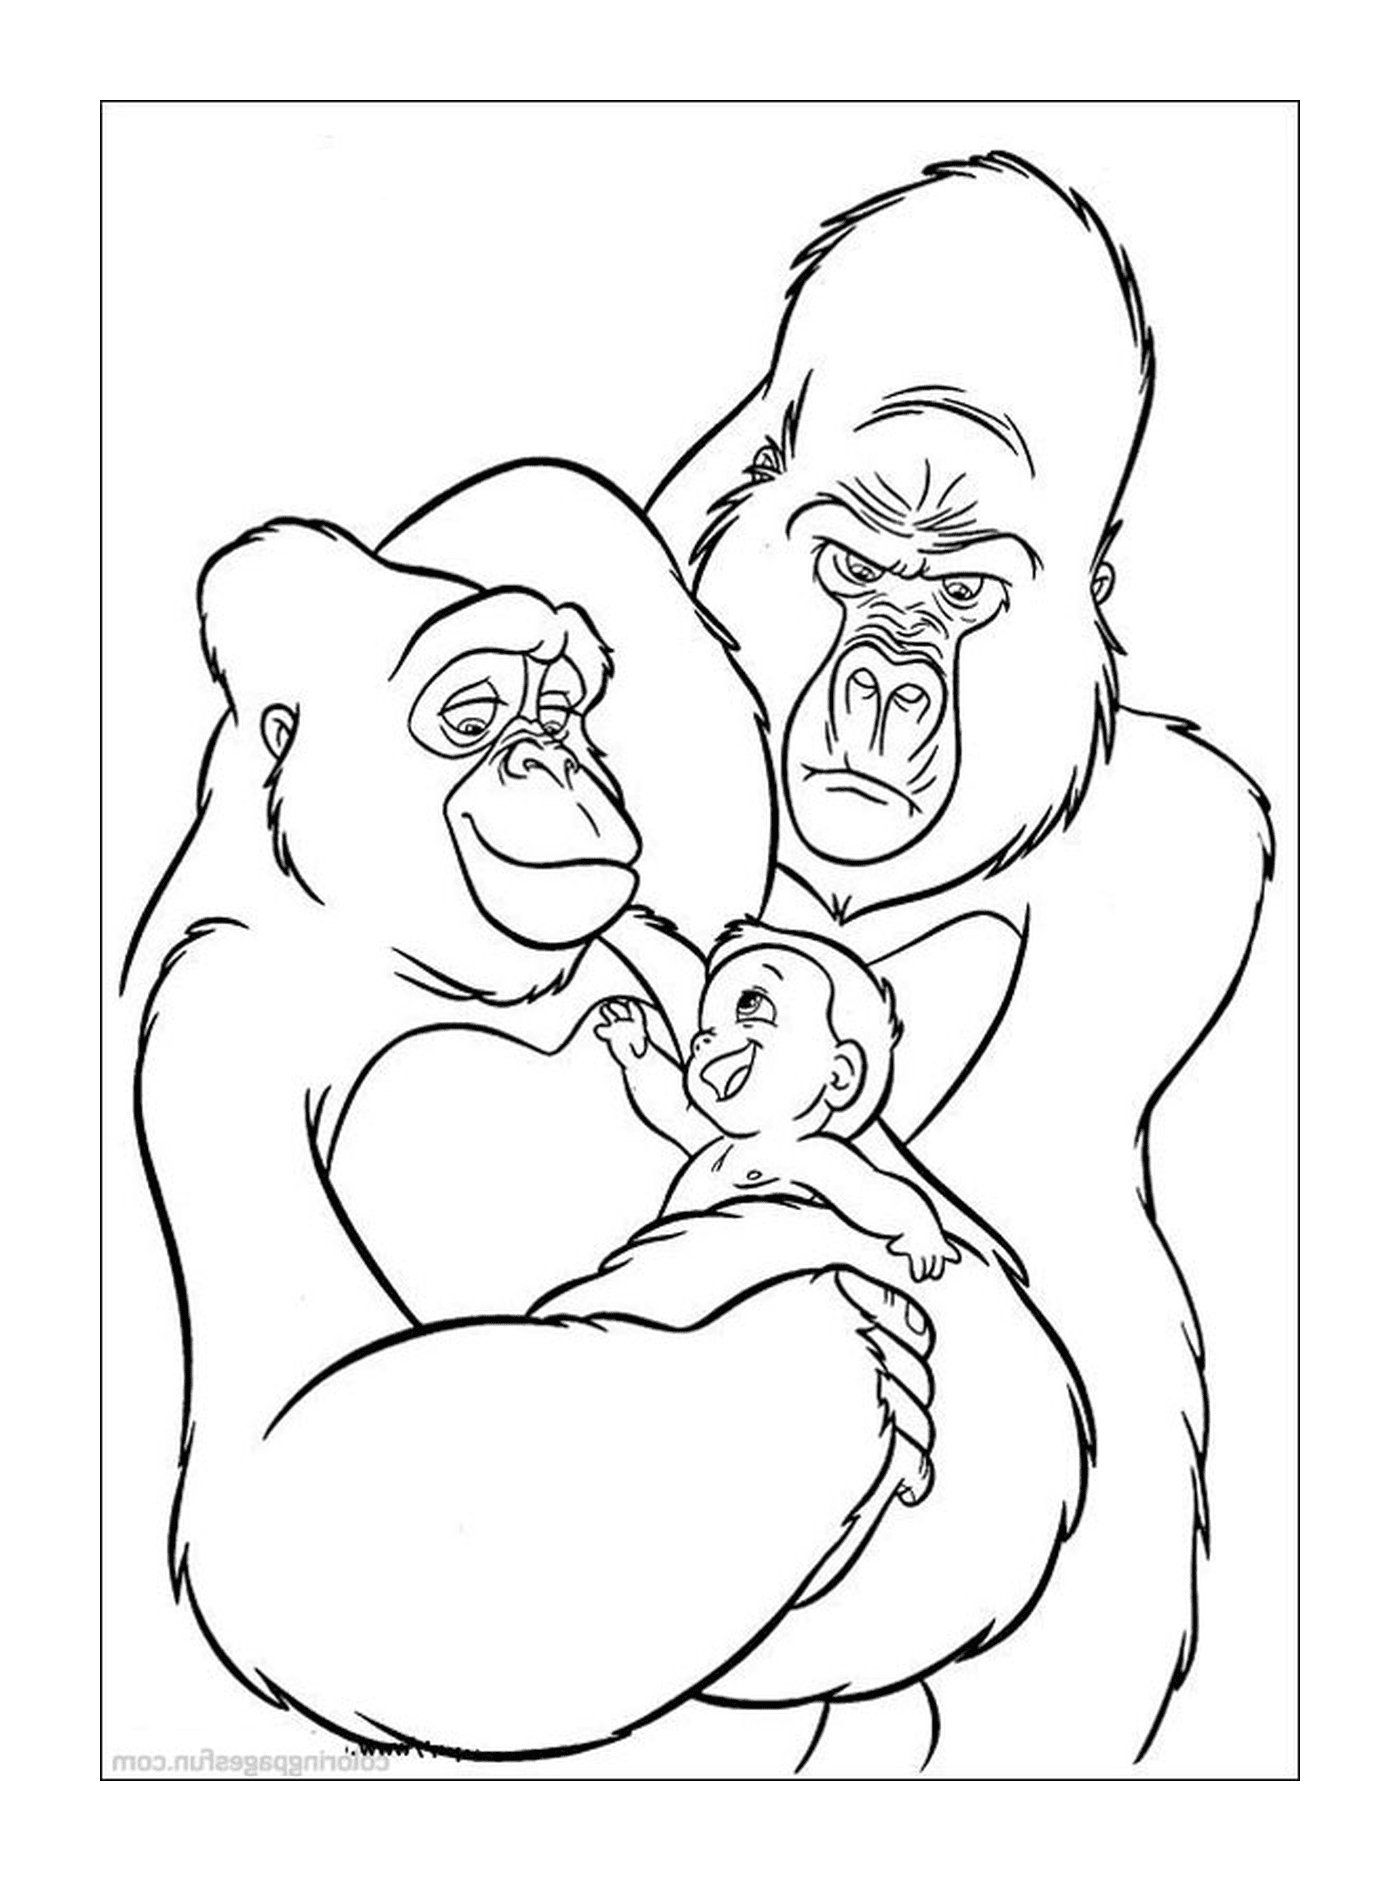  Gorila e gorila bebê 